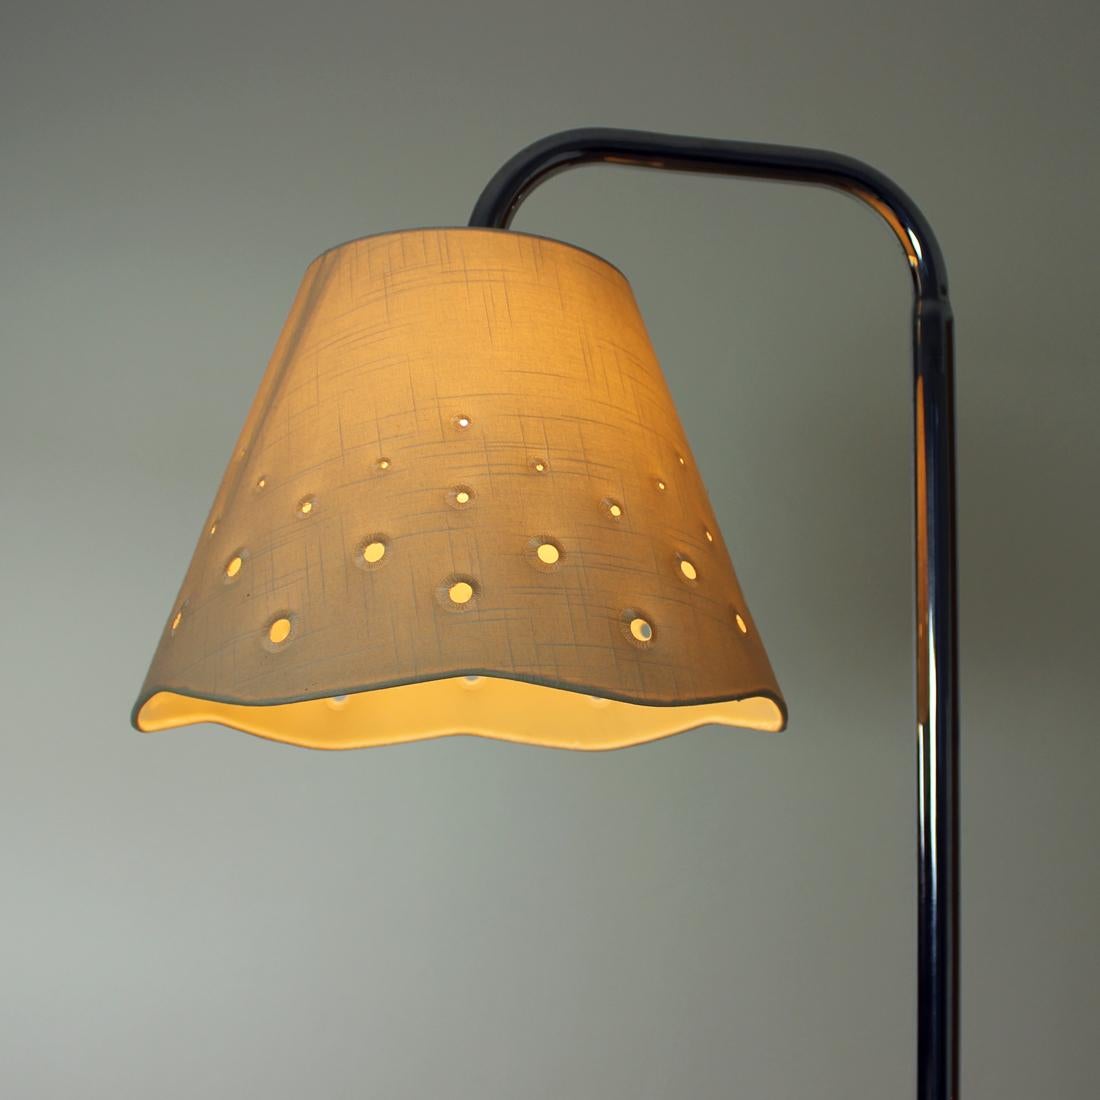 Mid-20th Century Functionalism Floor Lamp by Jindrich Halabala, Czechoslovakia 1930s For Sale